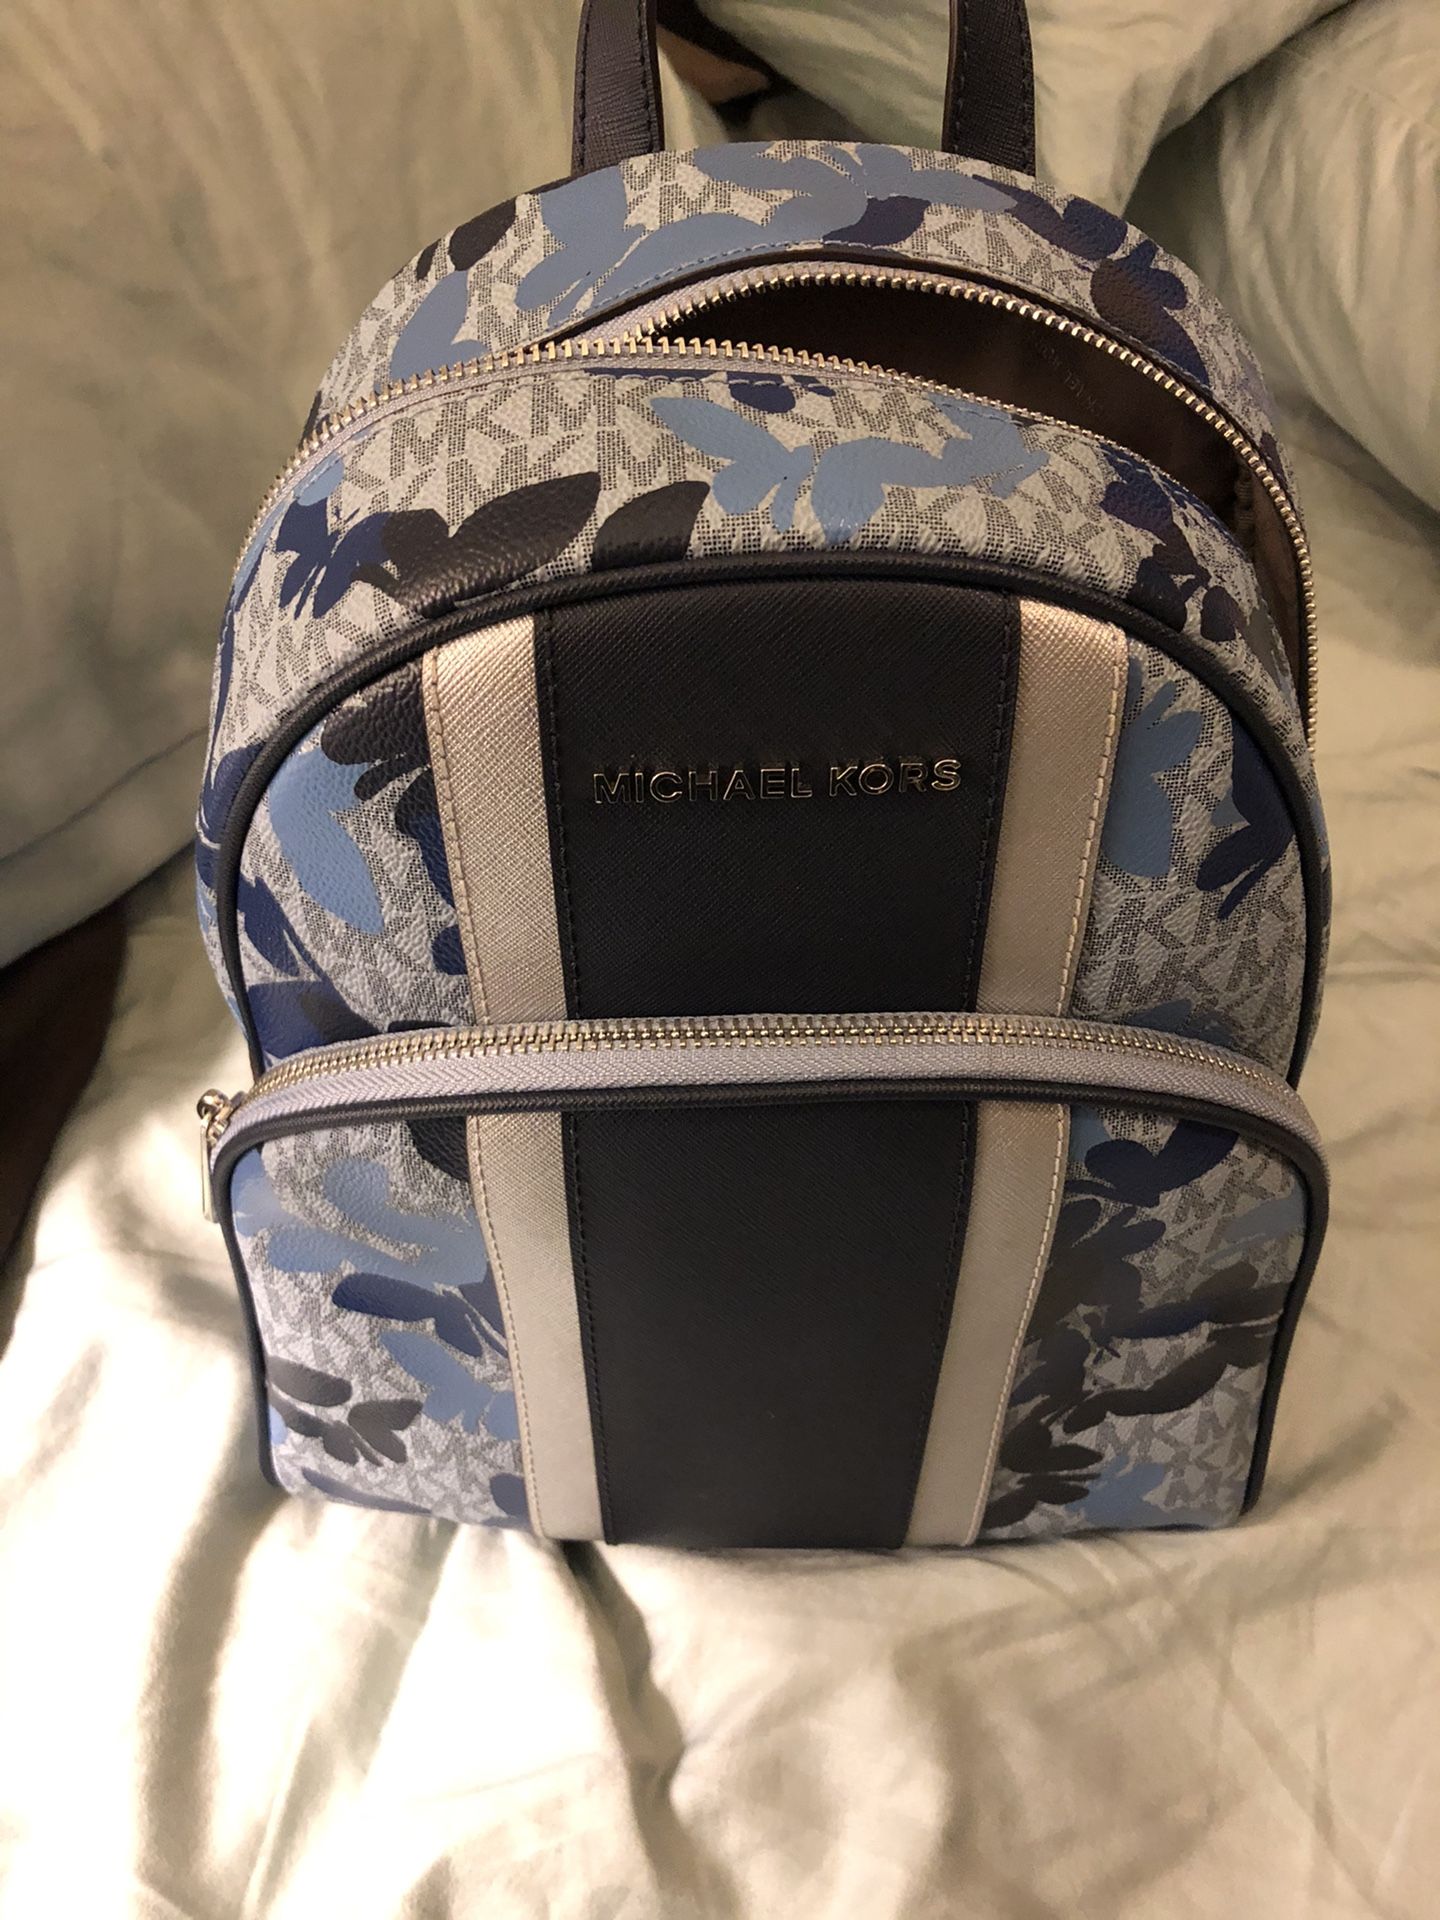 Michael kors bookbag purse